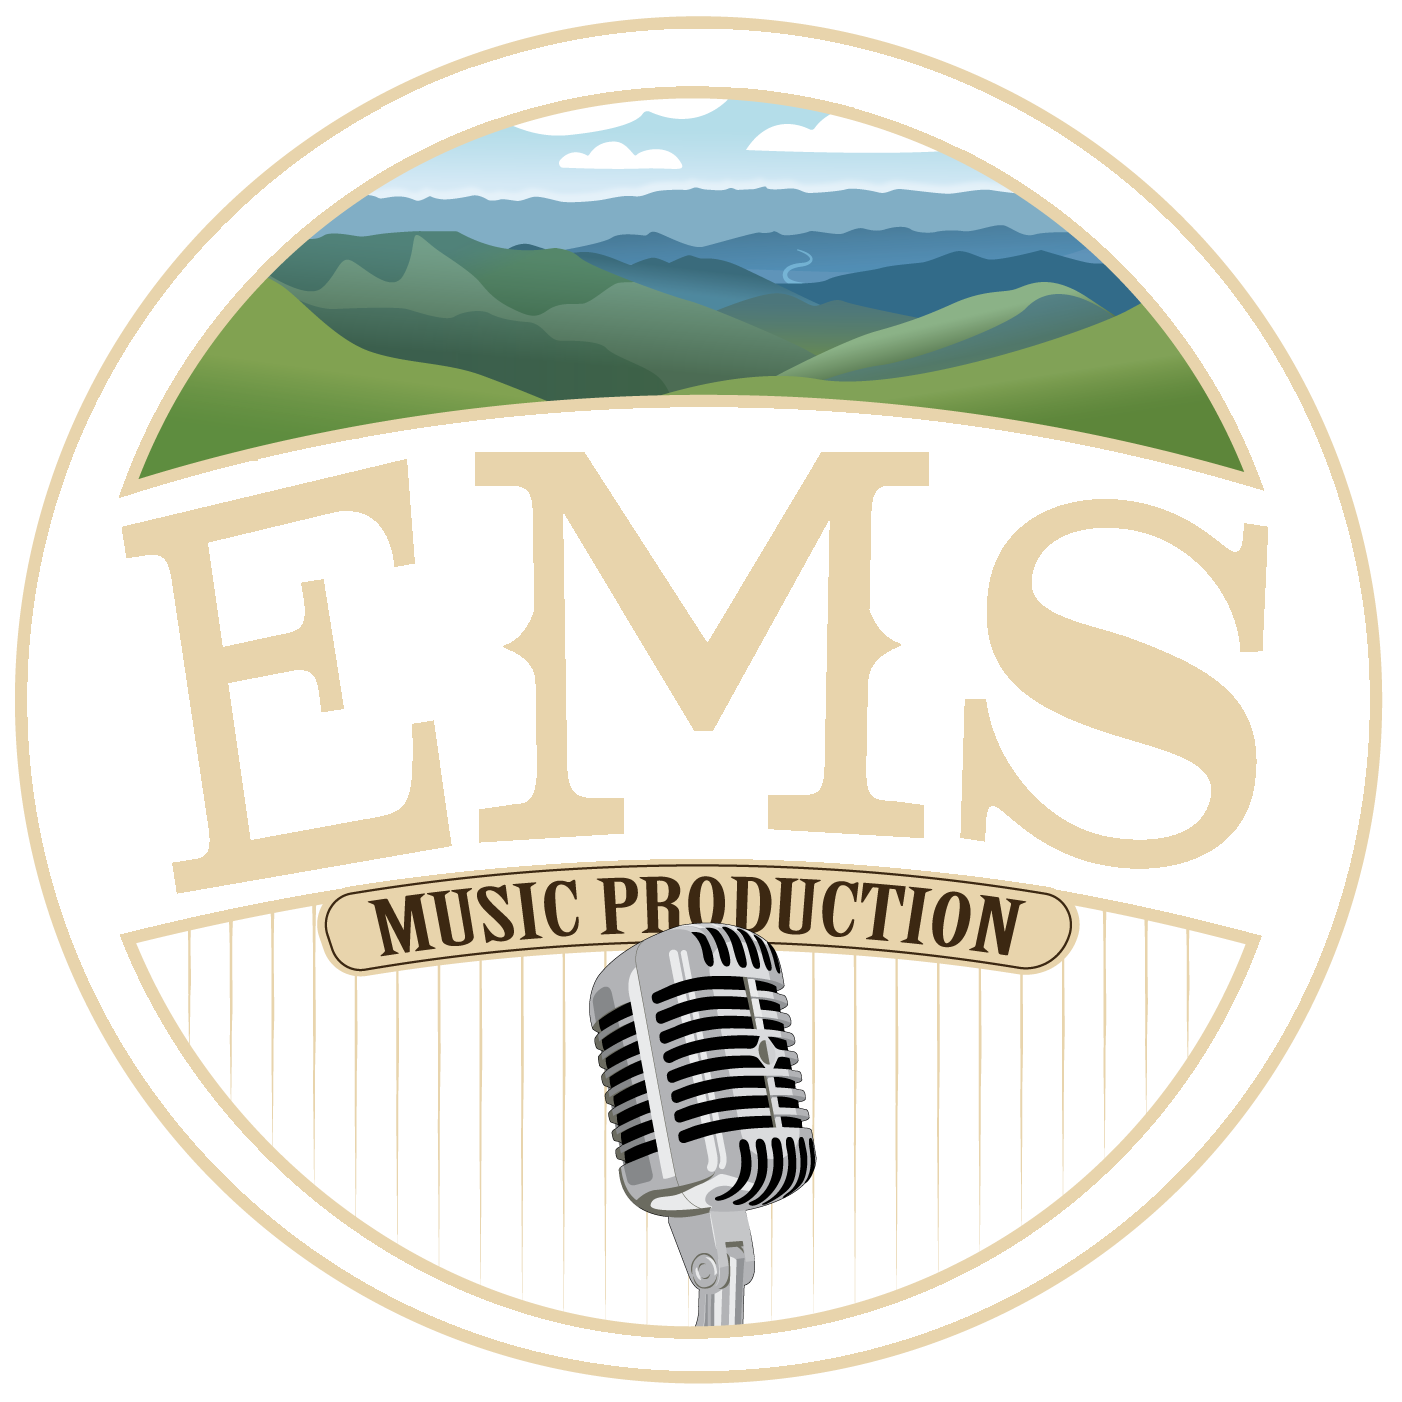 EMS Music production logo and illustration